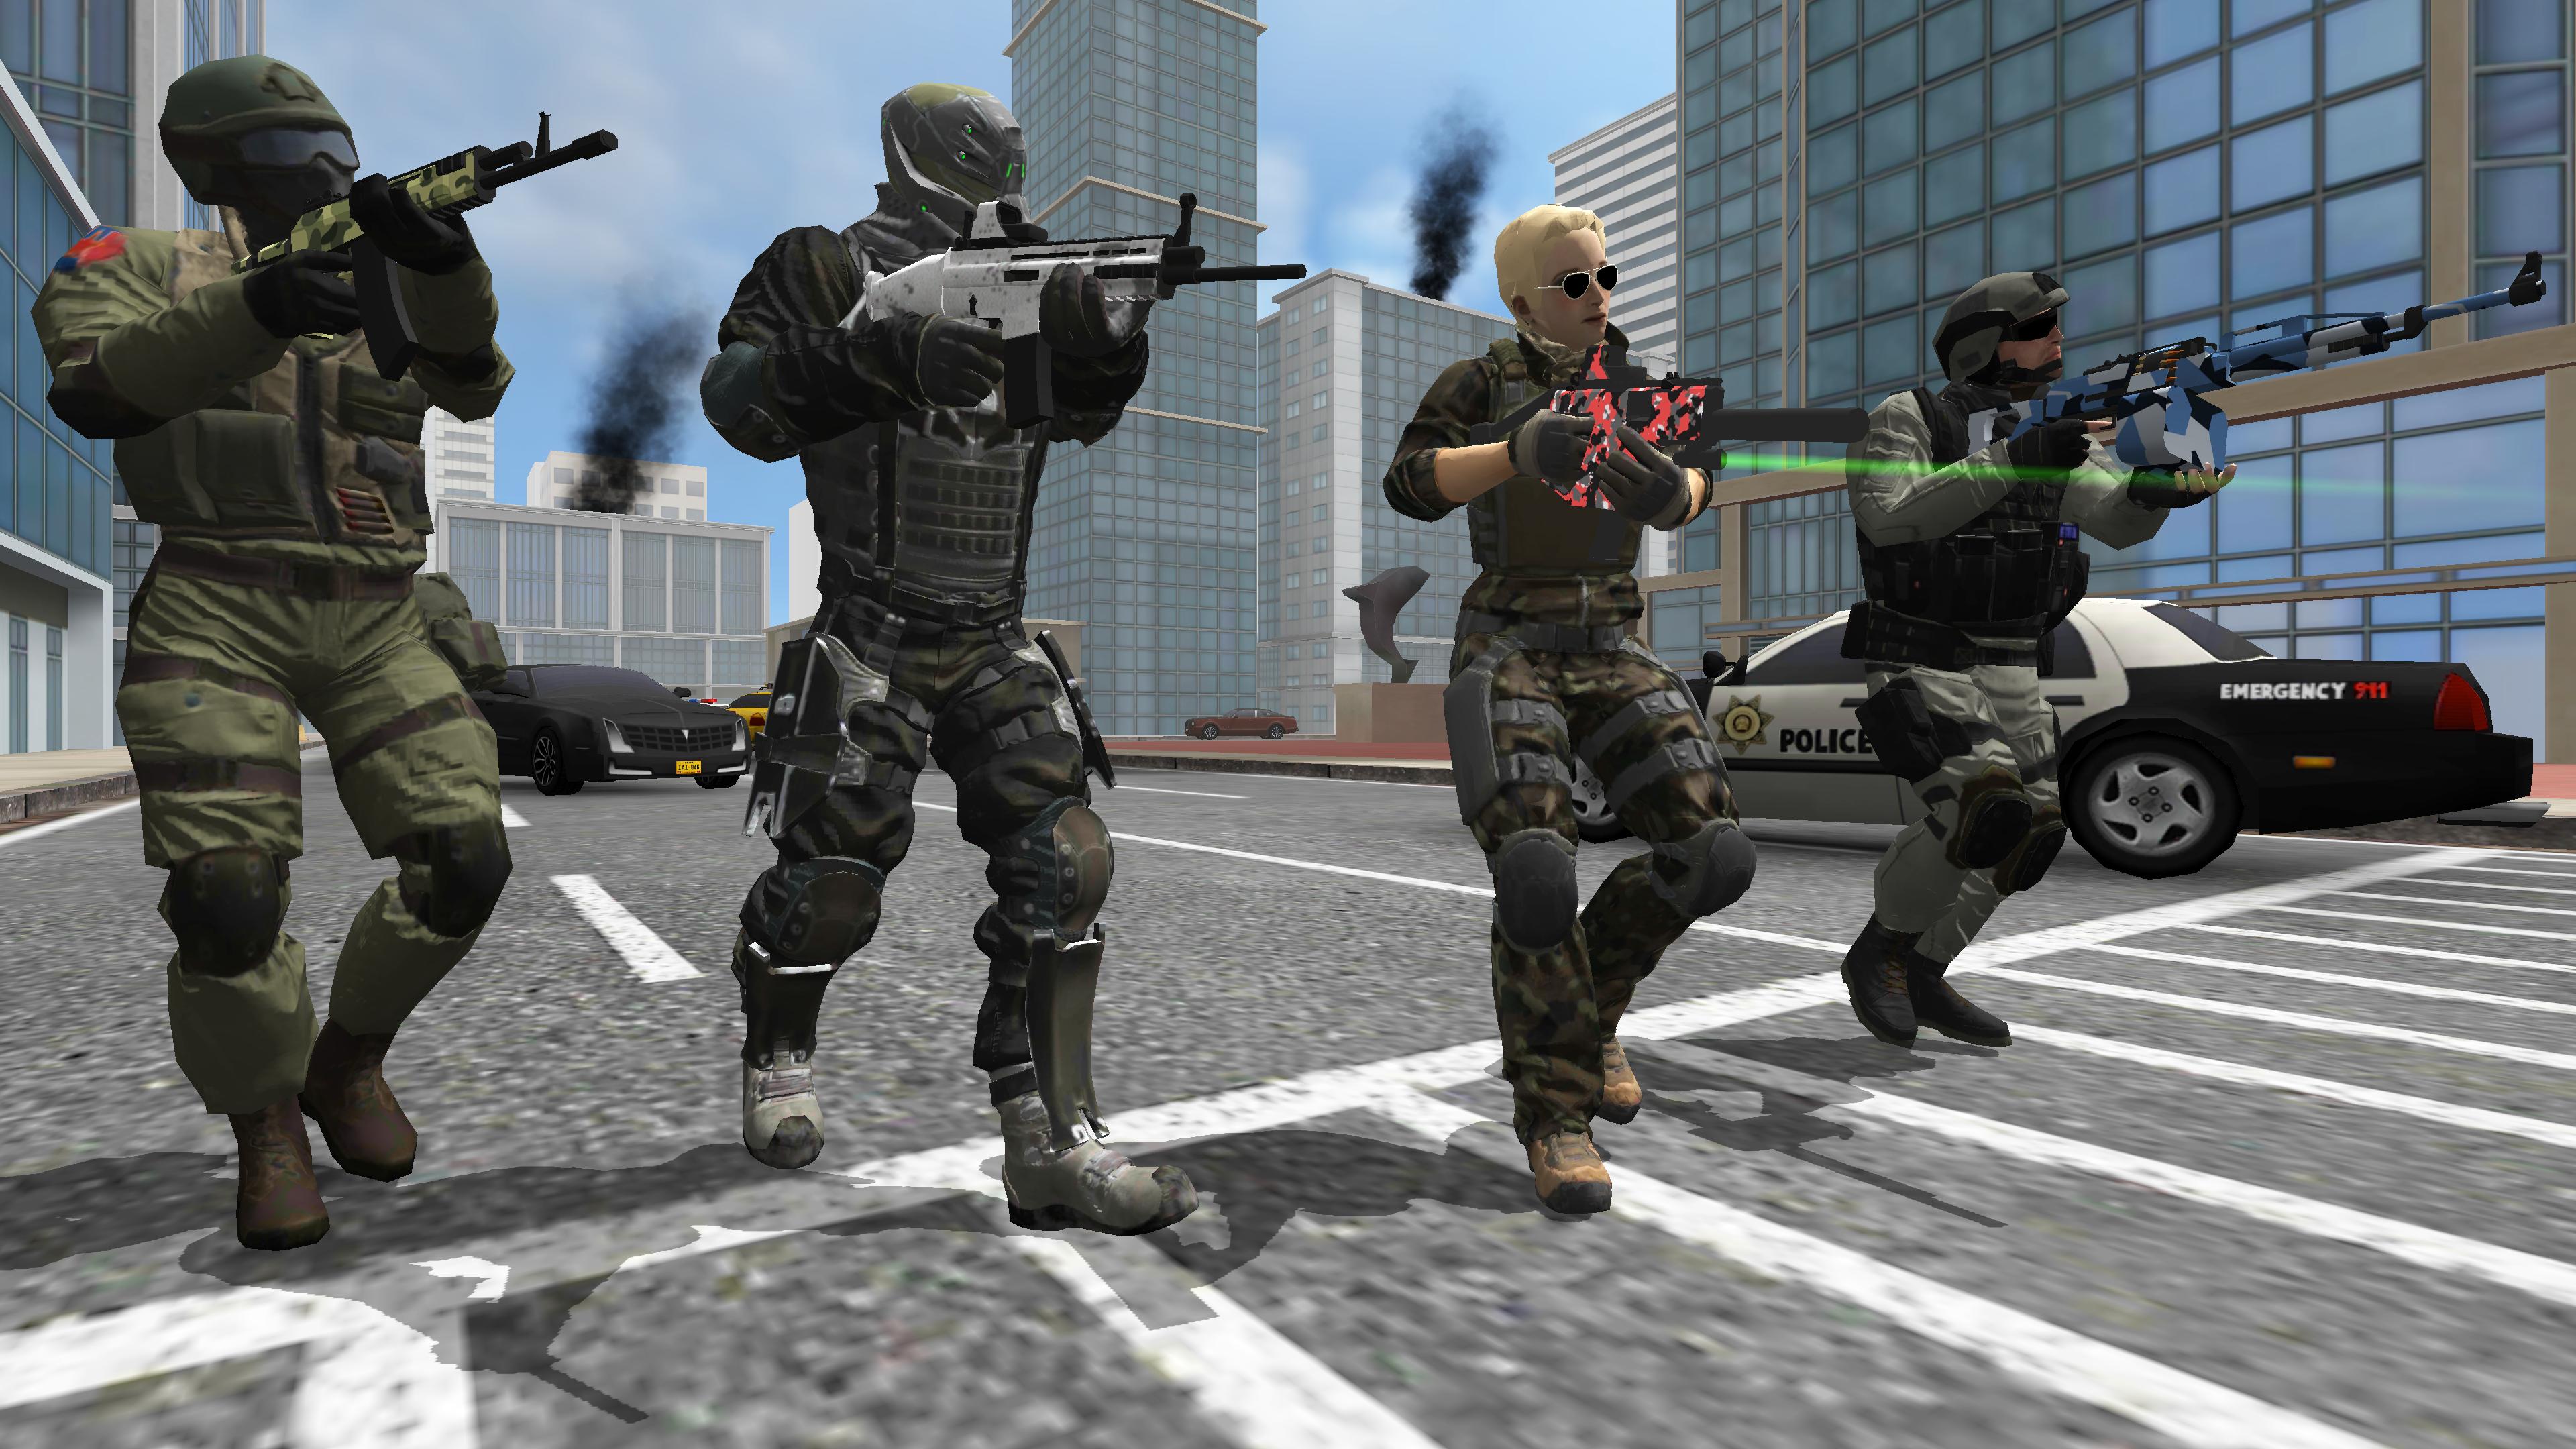 Earth Protect Squad Third Person Shooting Game 2.00.32b Screenshot 11